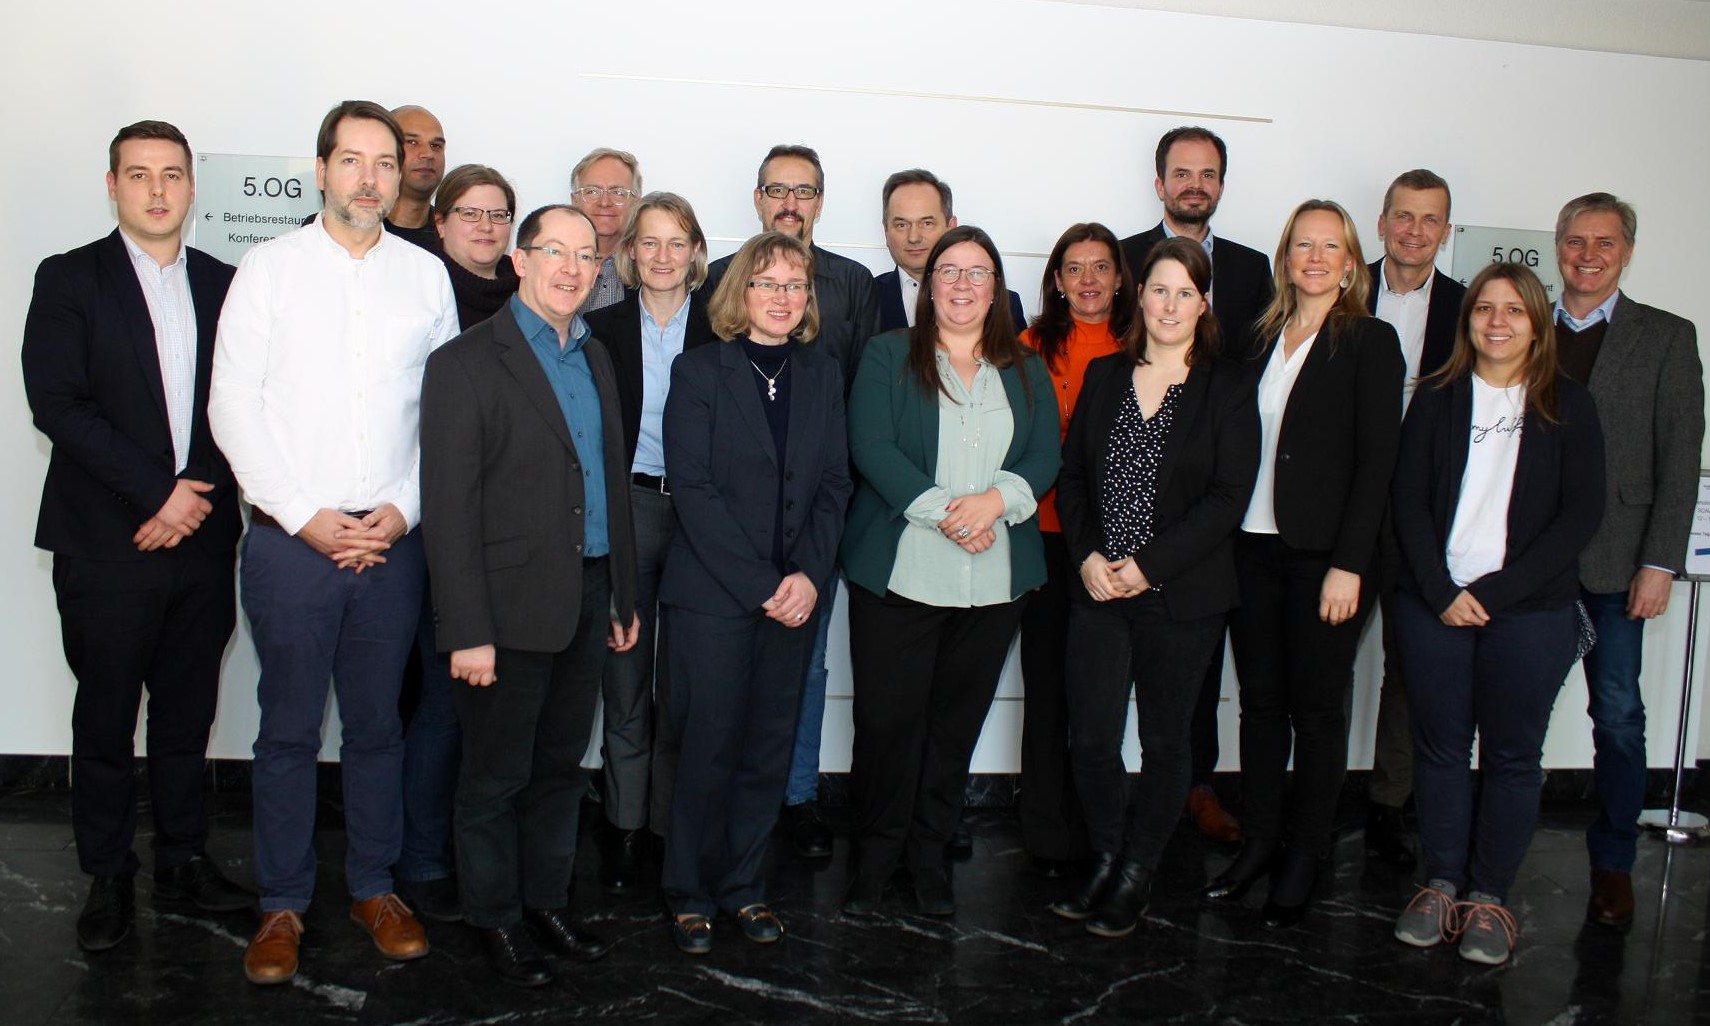  Nordhessen lanza el Open Innovation Challenge